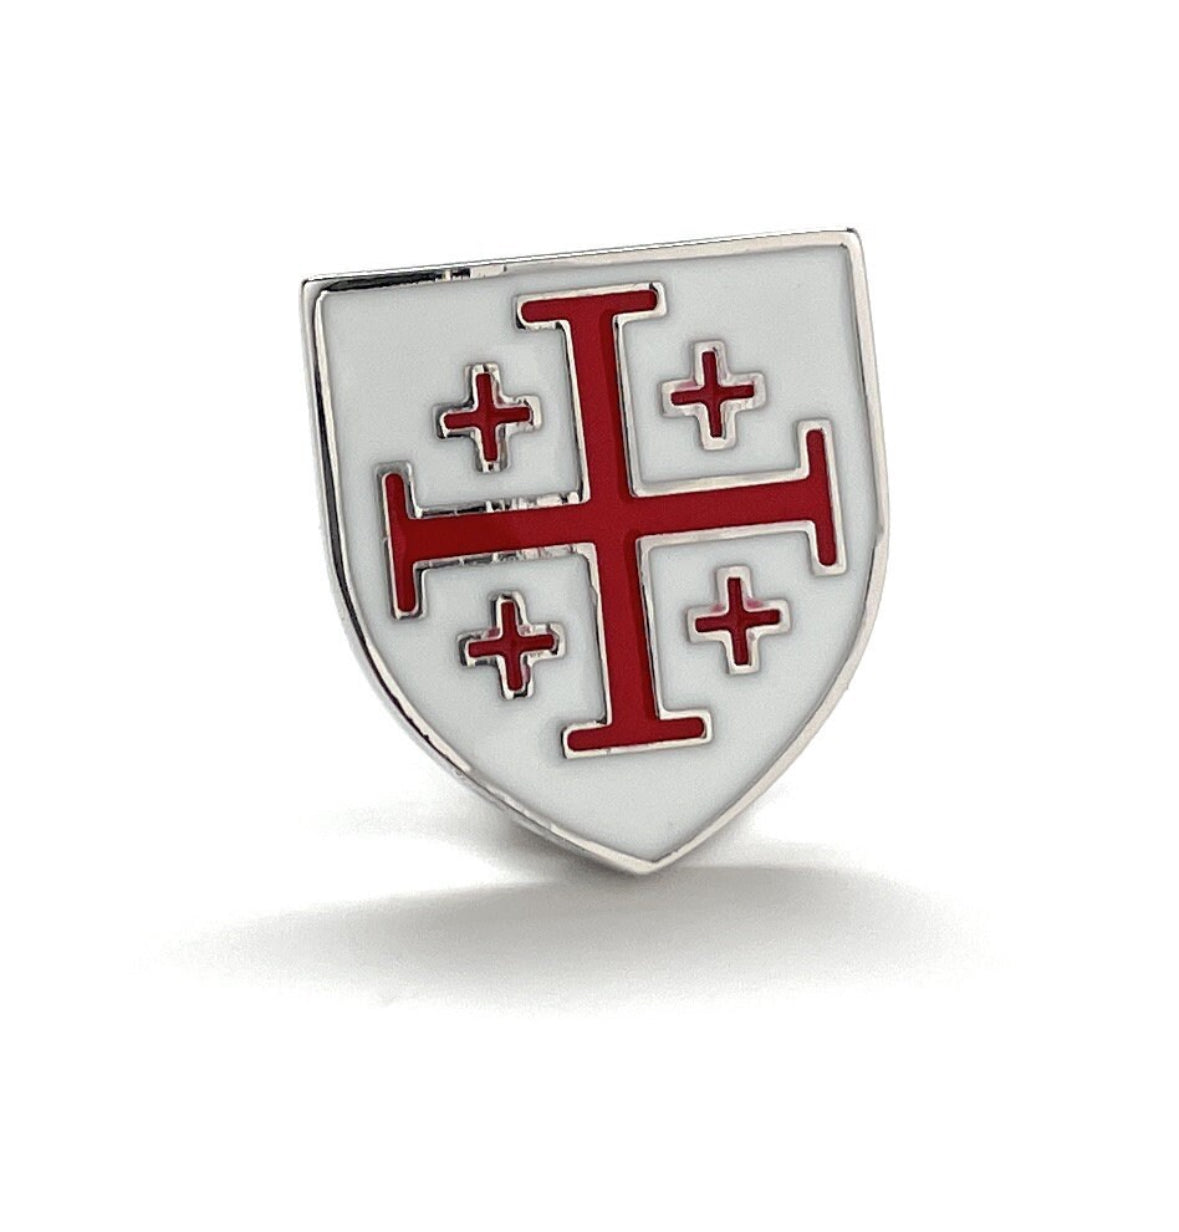 Crusaders Shield Pin Magnet Red and White Enamel Magnet Backing Jerusalem Cross Lapel Pin 3D Five-Fold Cross Pin Tie Tack Lanyard Pins